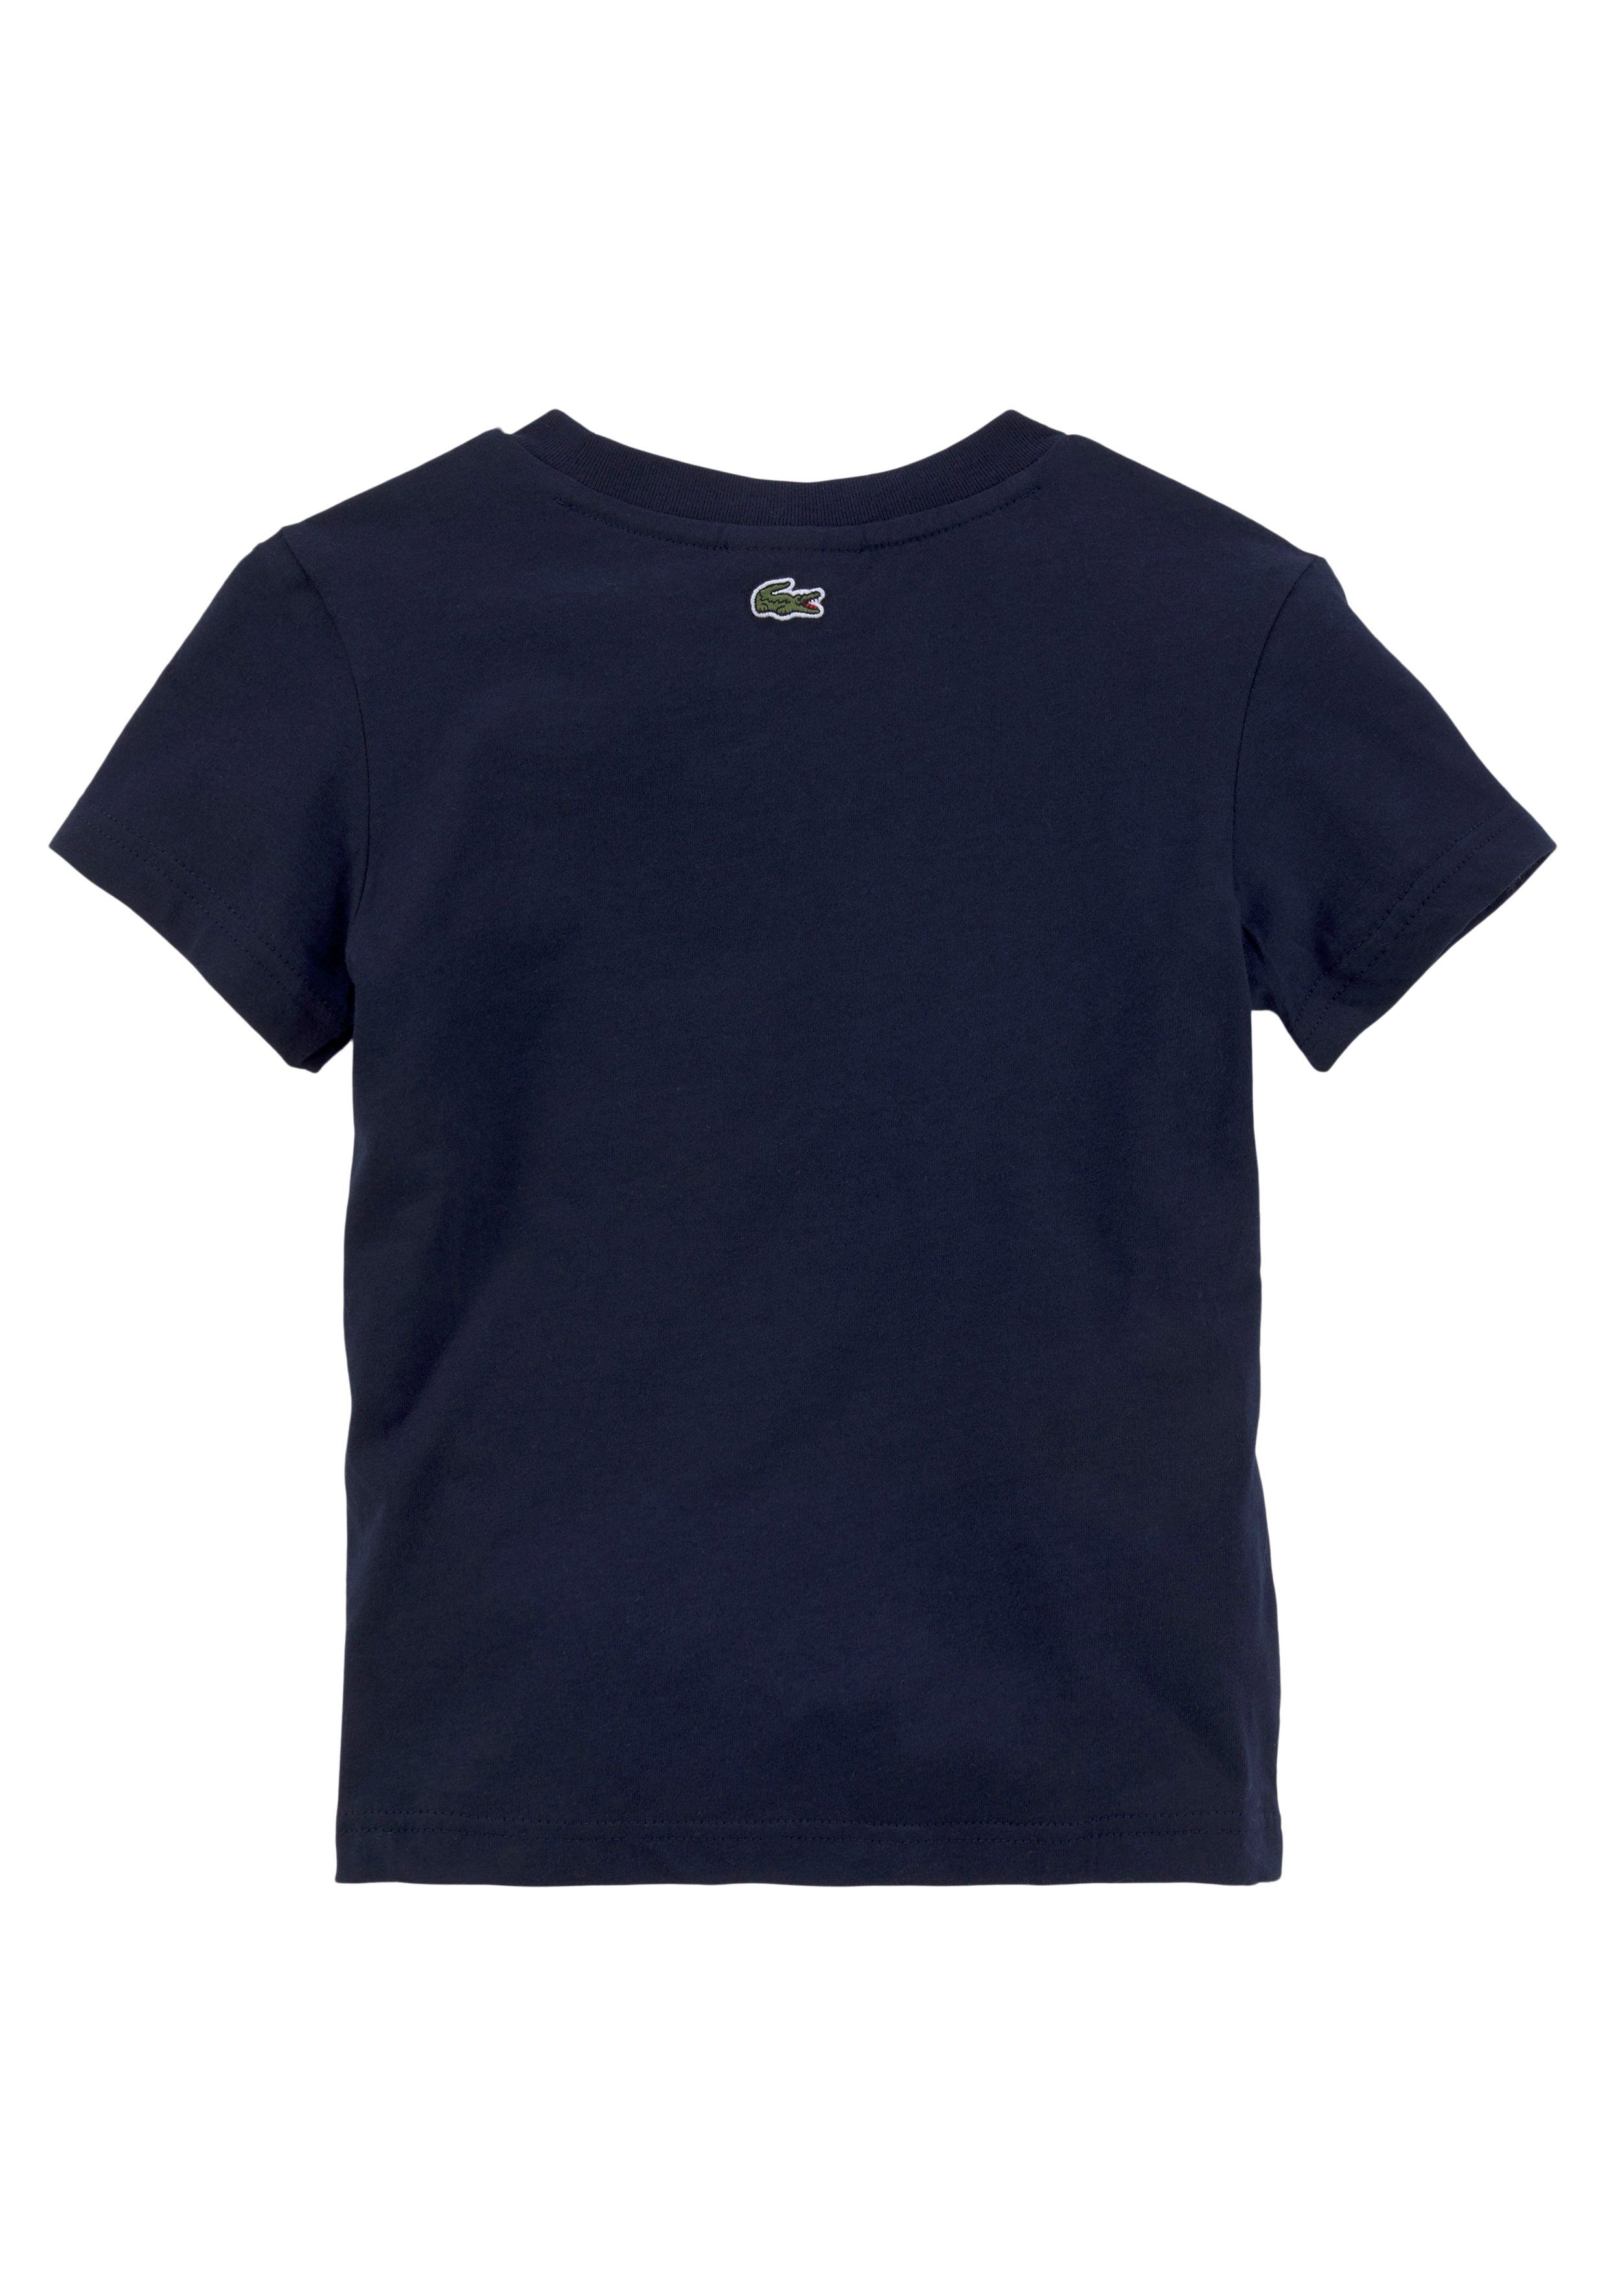 navy Logodruck blue großem T-Shirt Lacoste mit